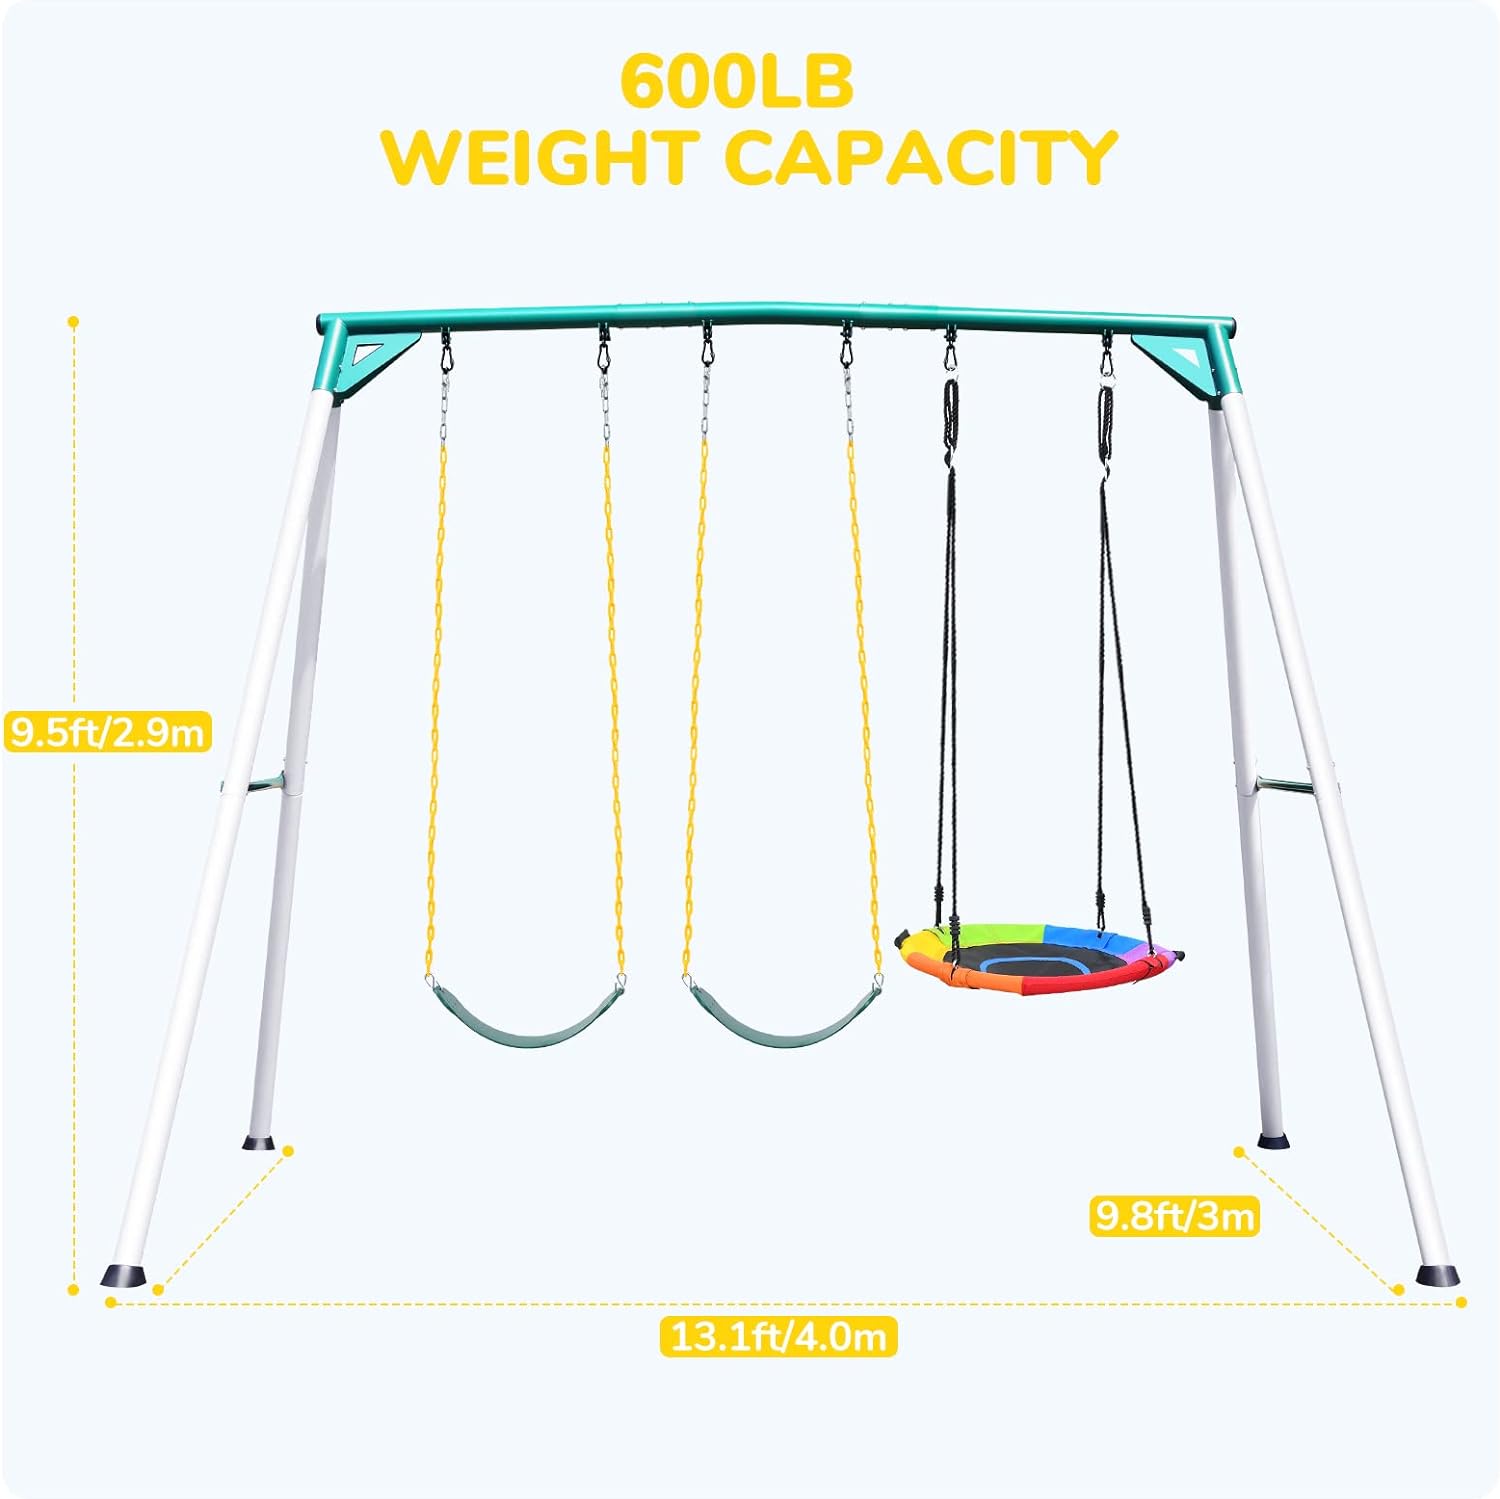 Hapfan 9.5' Heavy Duty Tall Swing Sets for Backyard for Kids and Adults with Saucer Swing, 2 Belt Swings